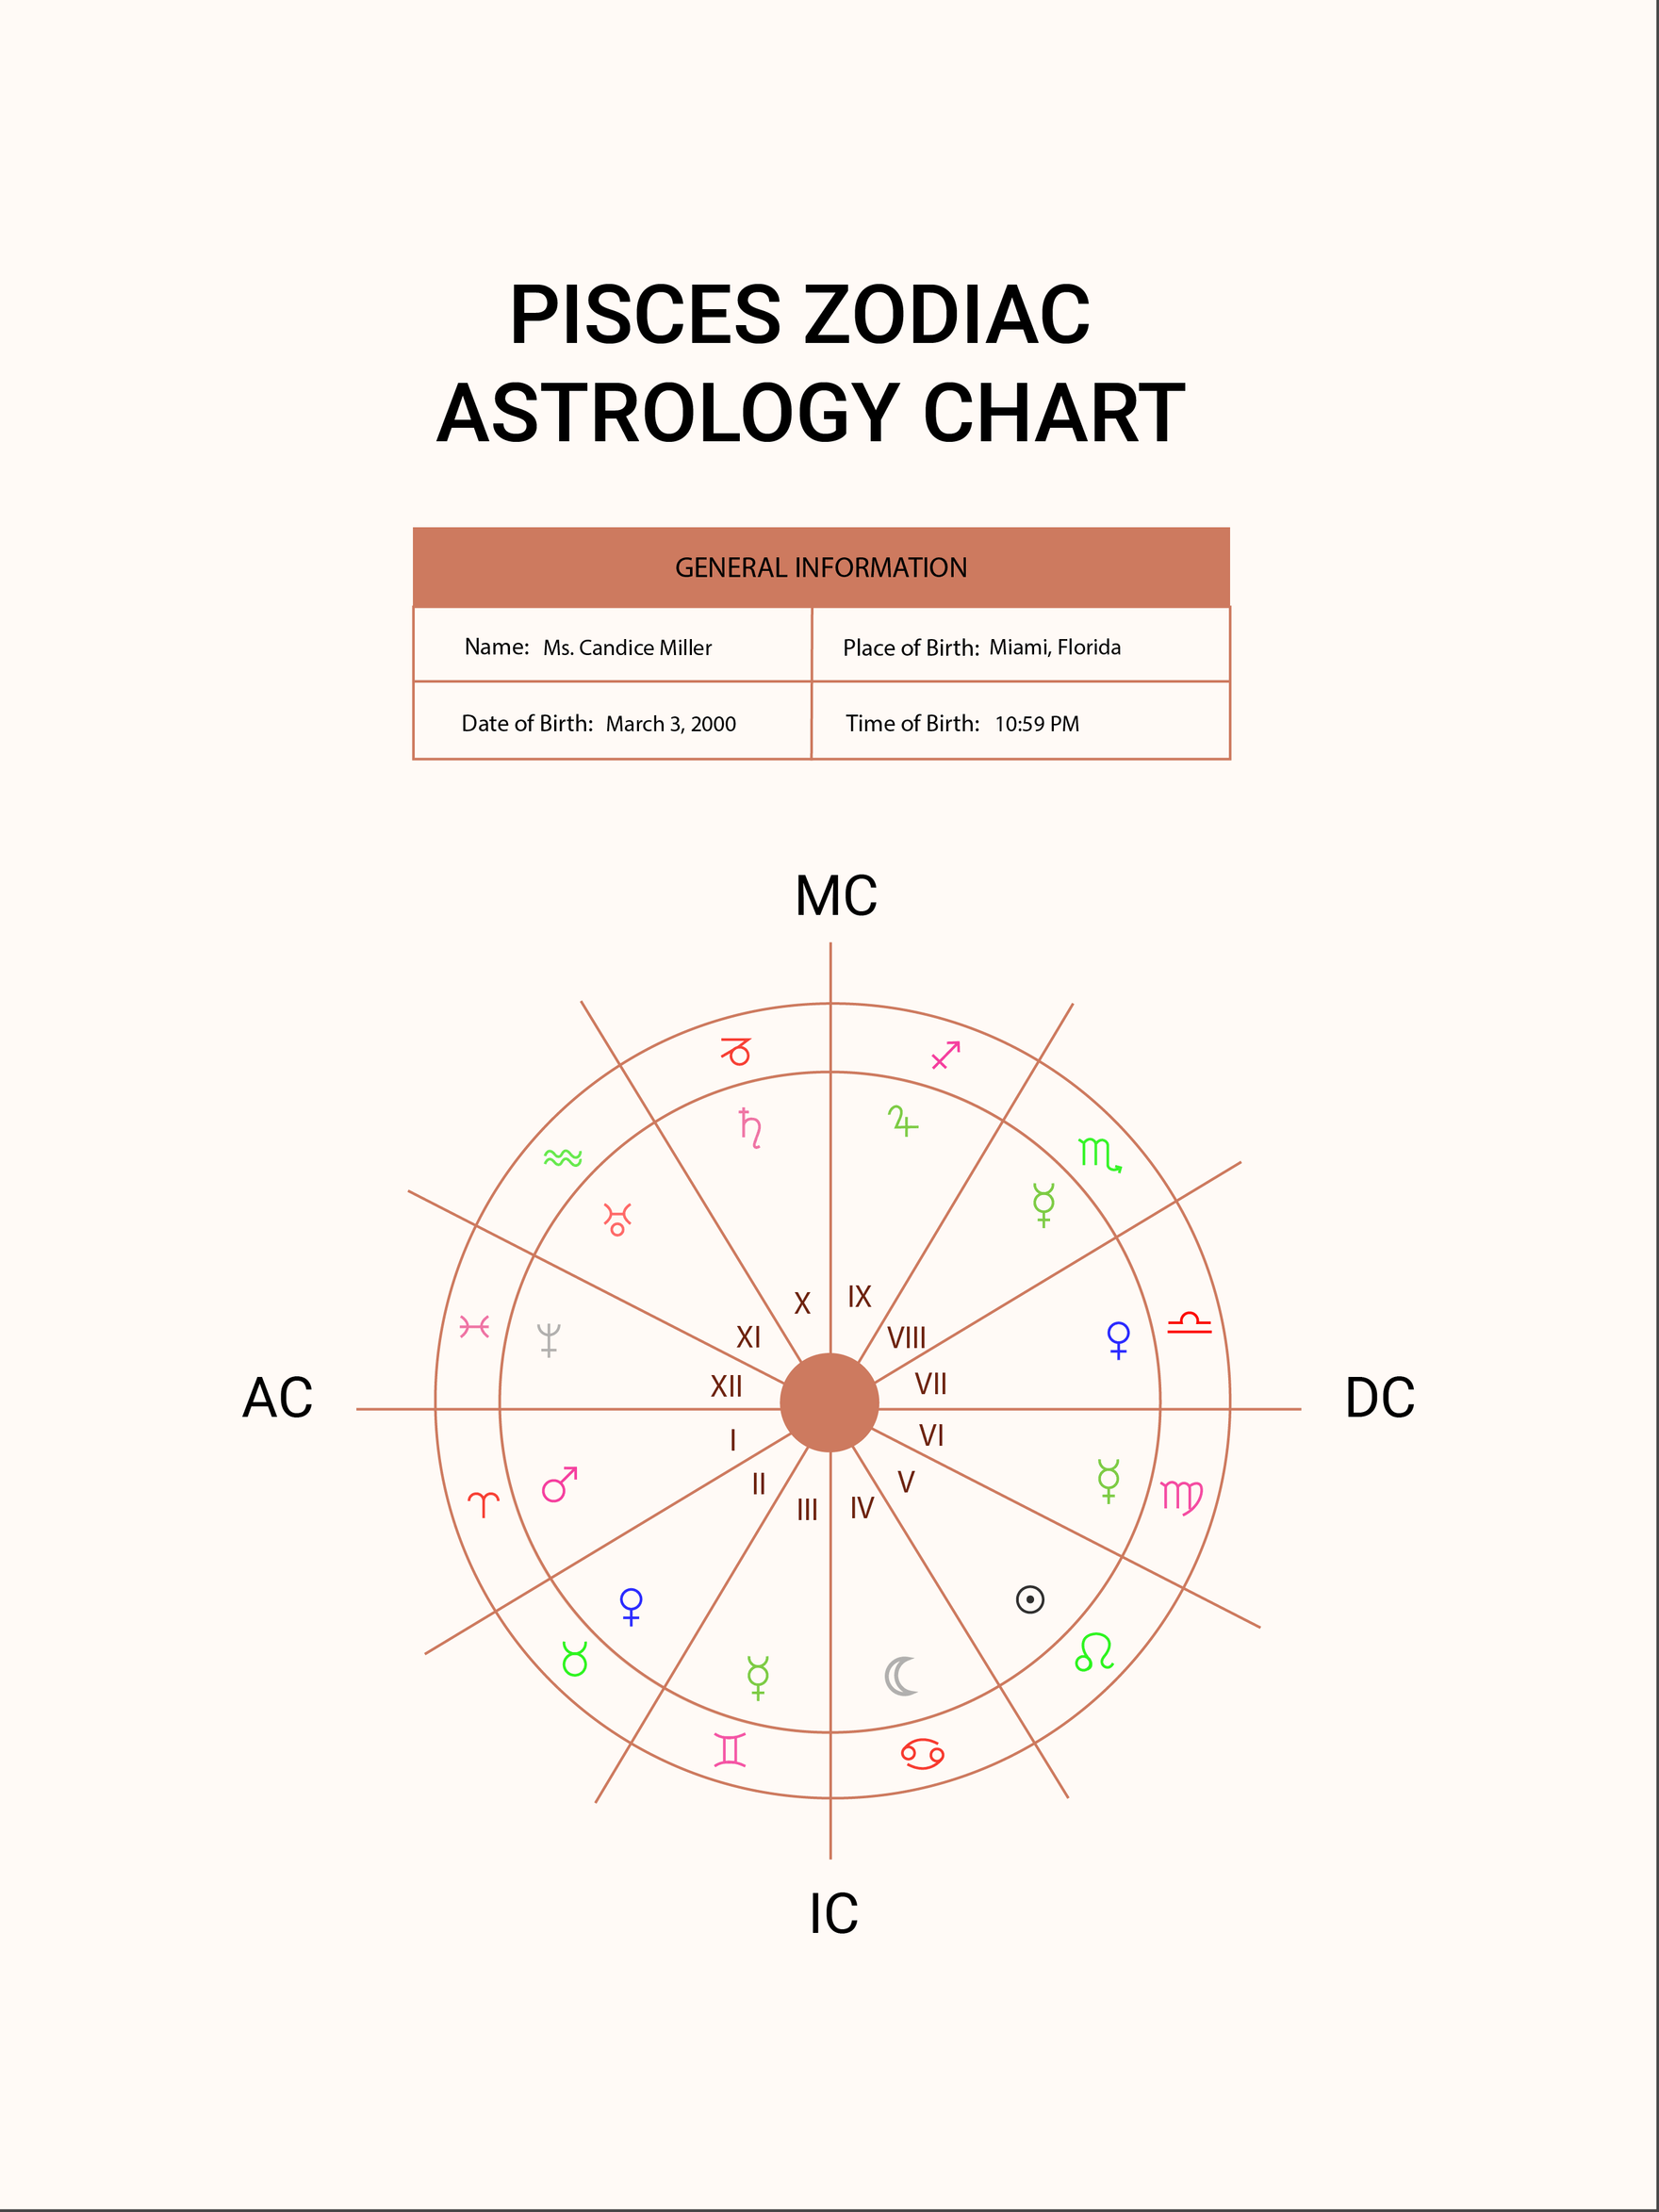 Pisces Zodiac Astrology Chart  in PDF, Illustrator